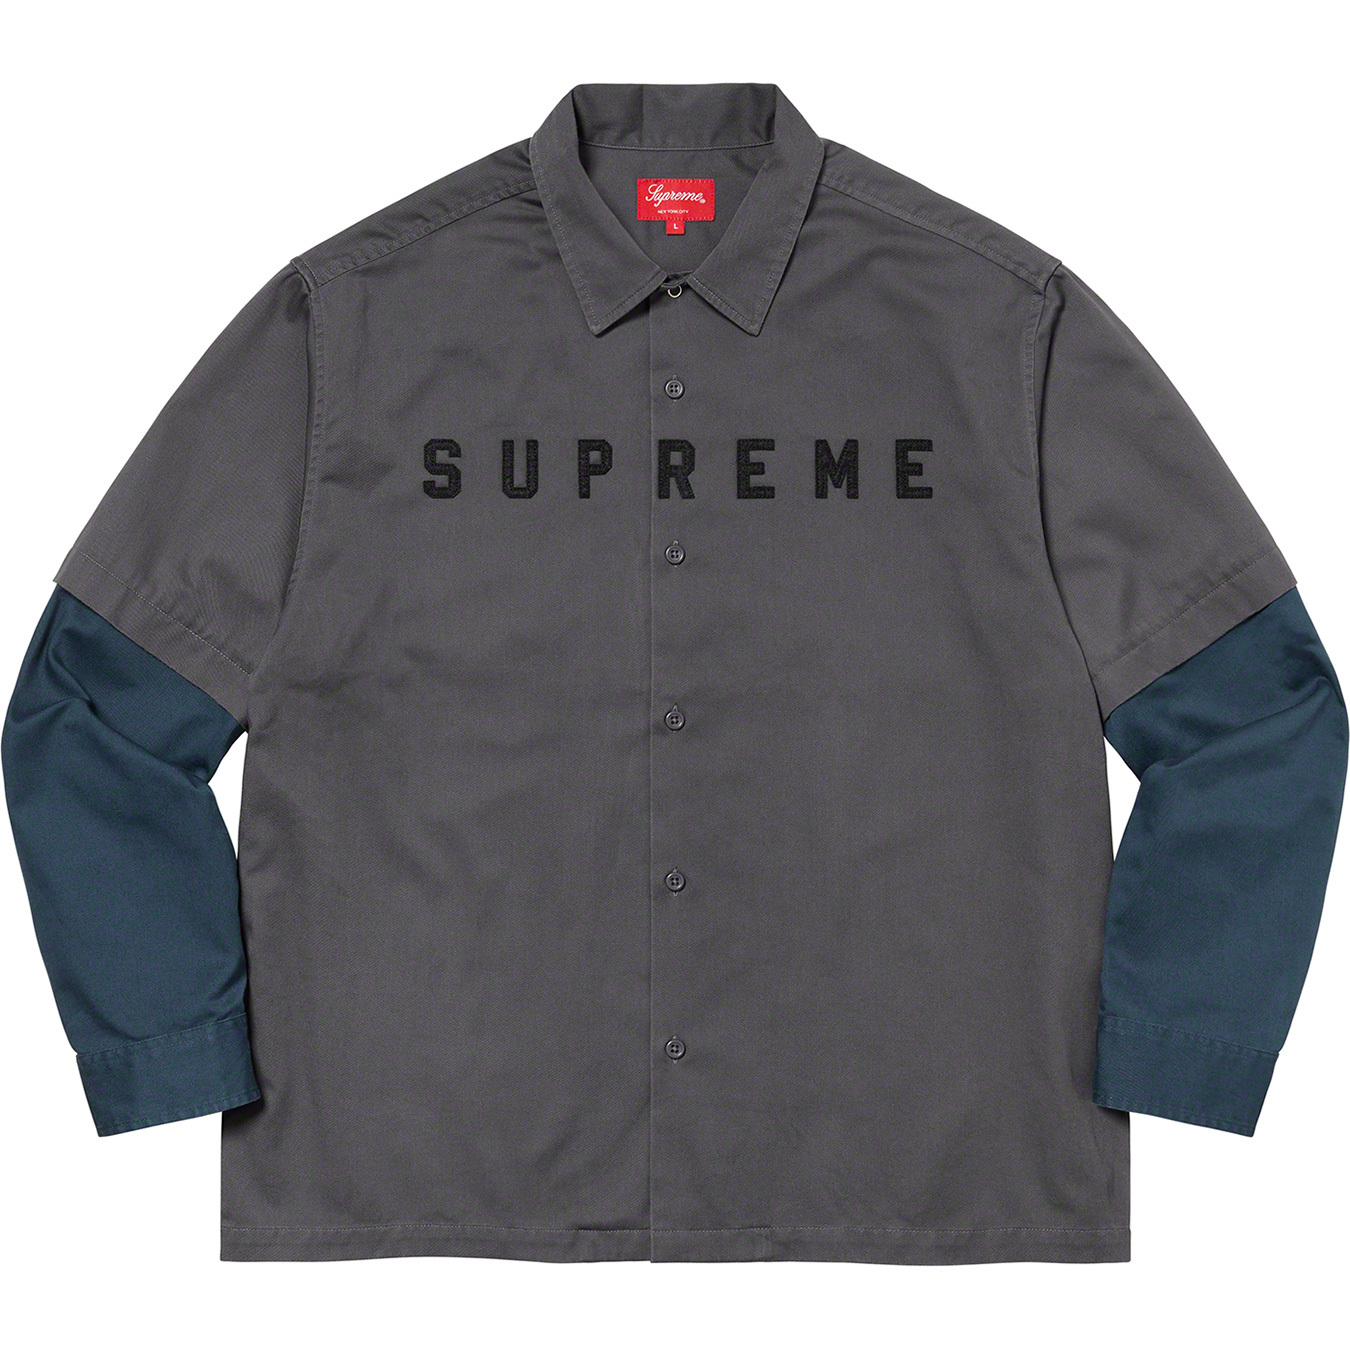 Supreme 2-Tone Work Shirt